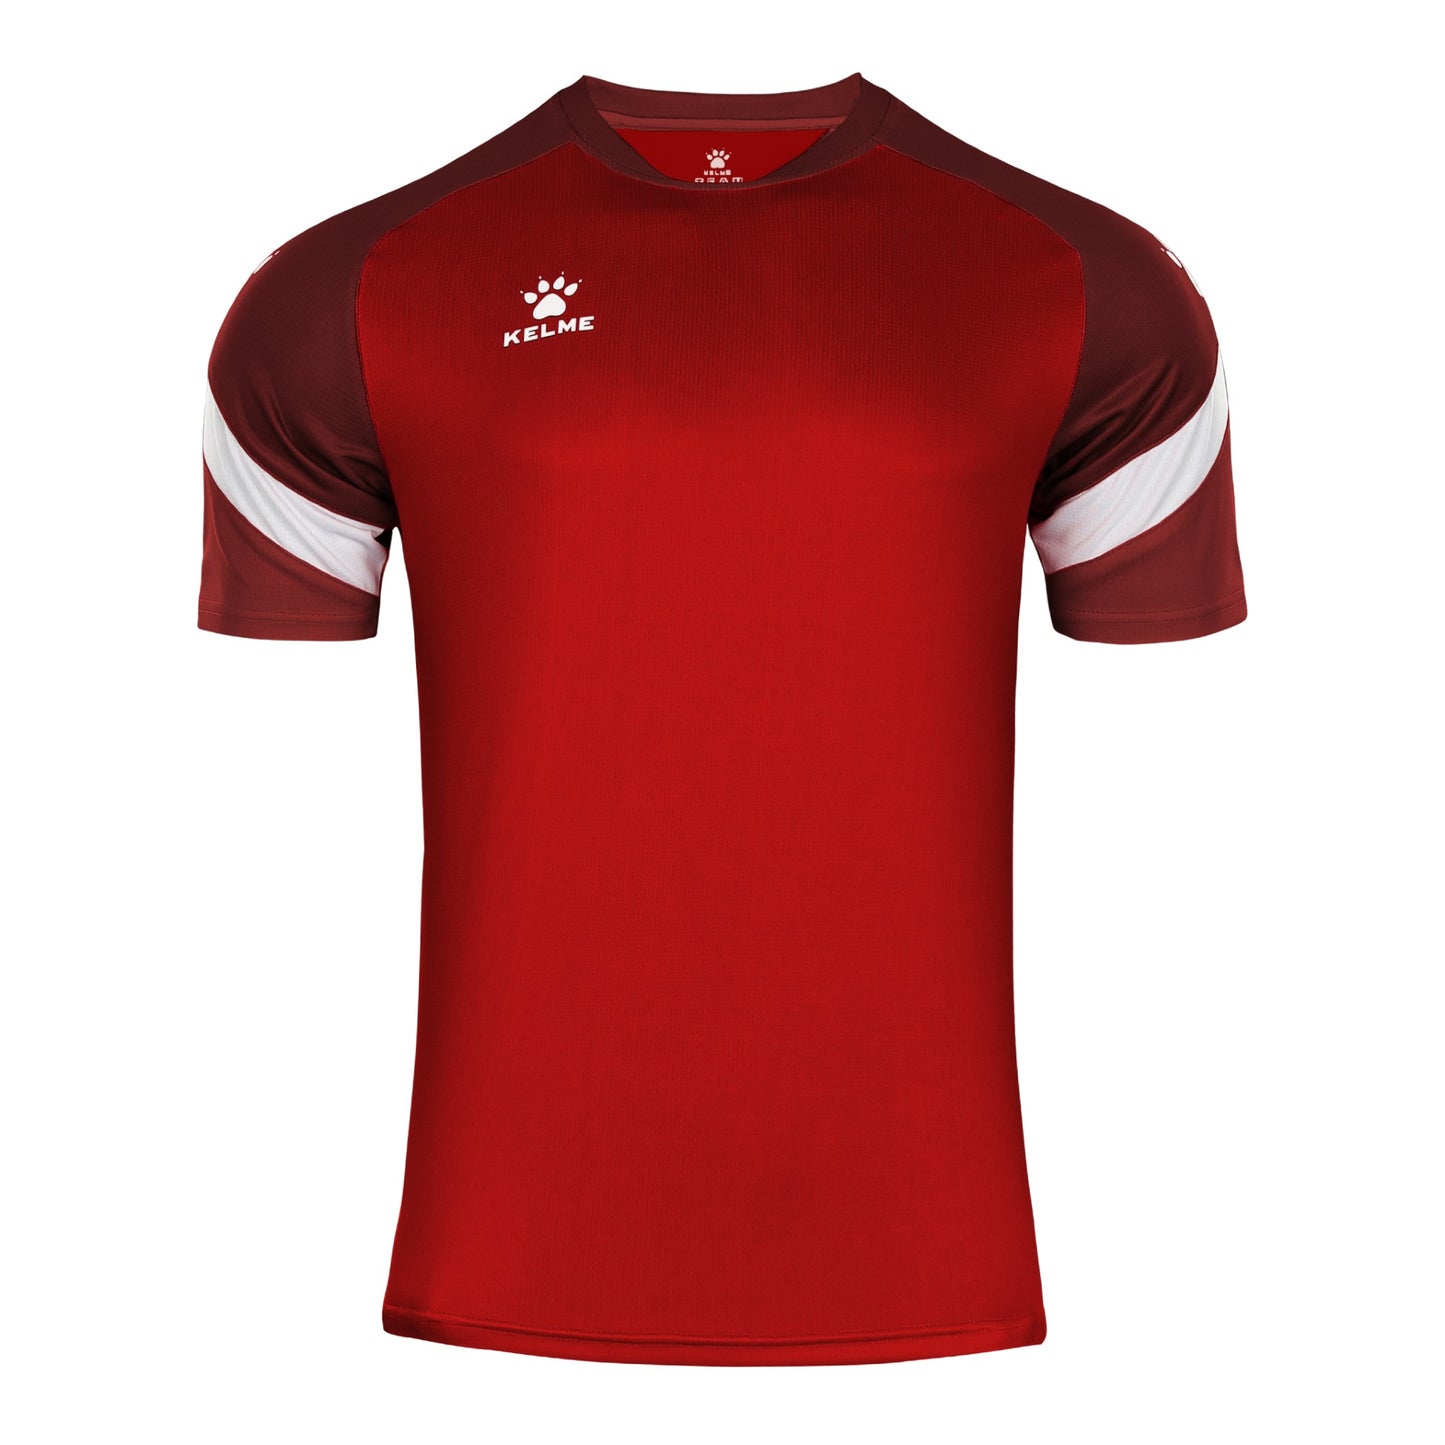 Warrior T-Shirt- Red/White